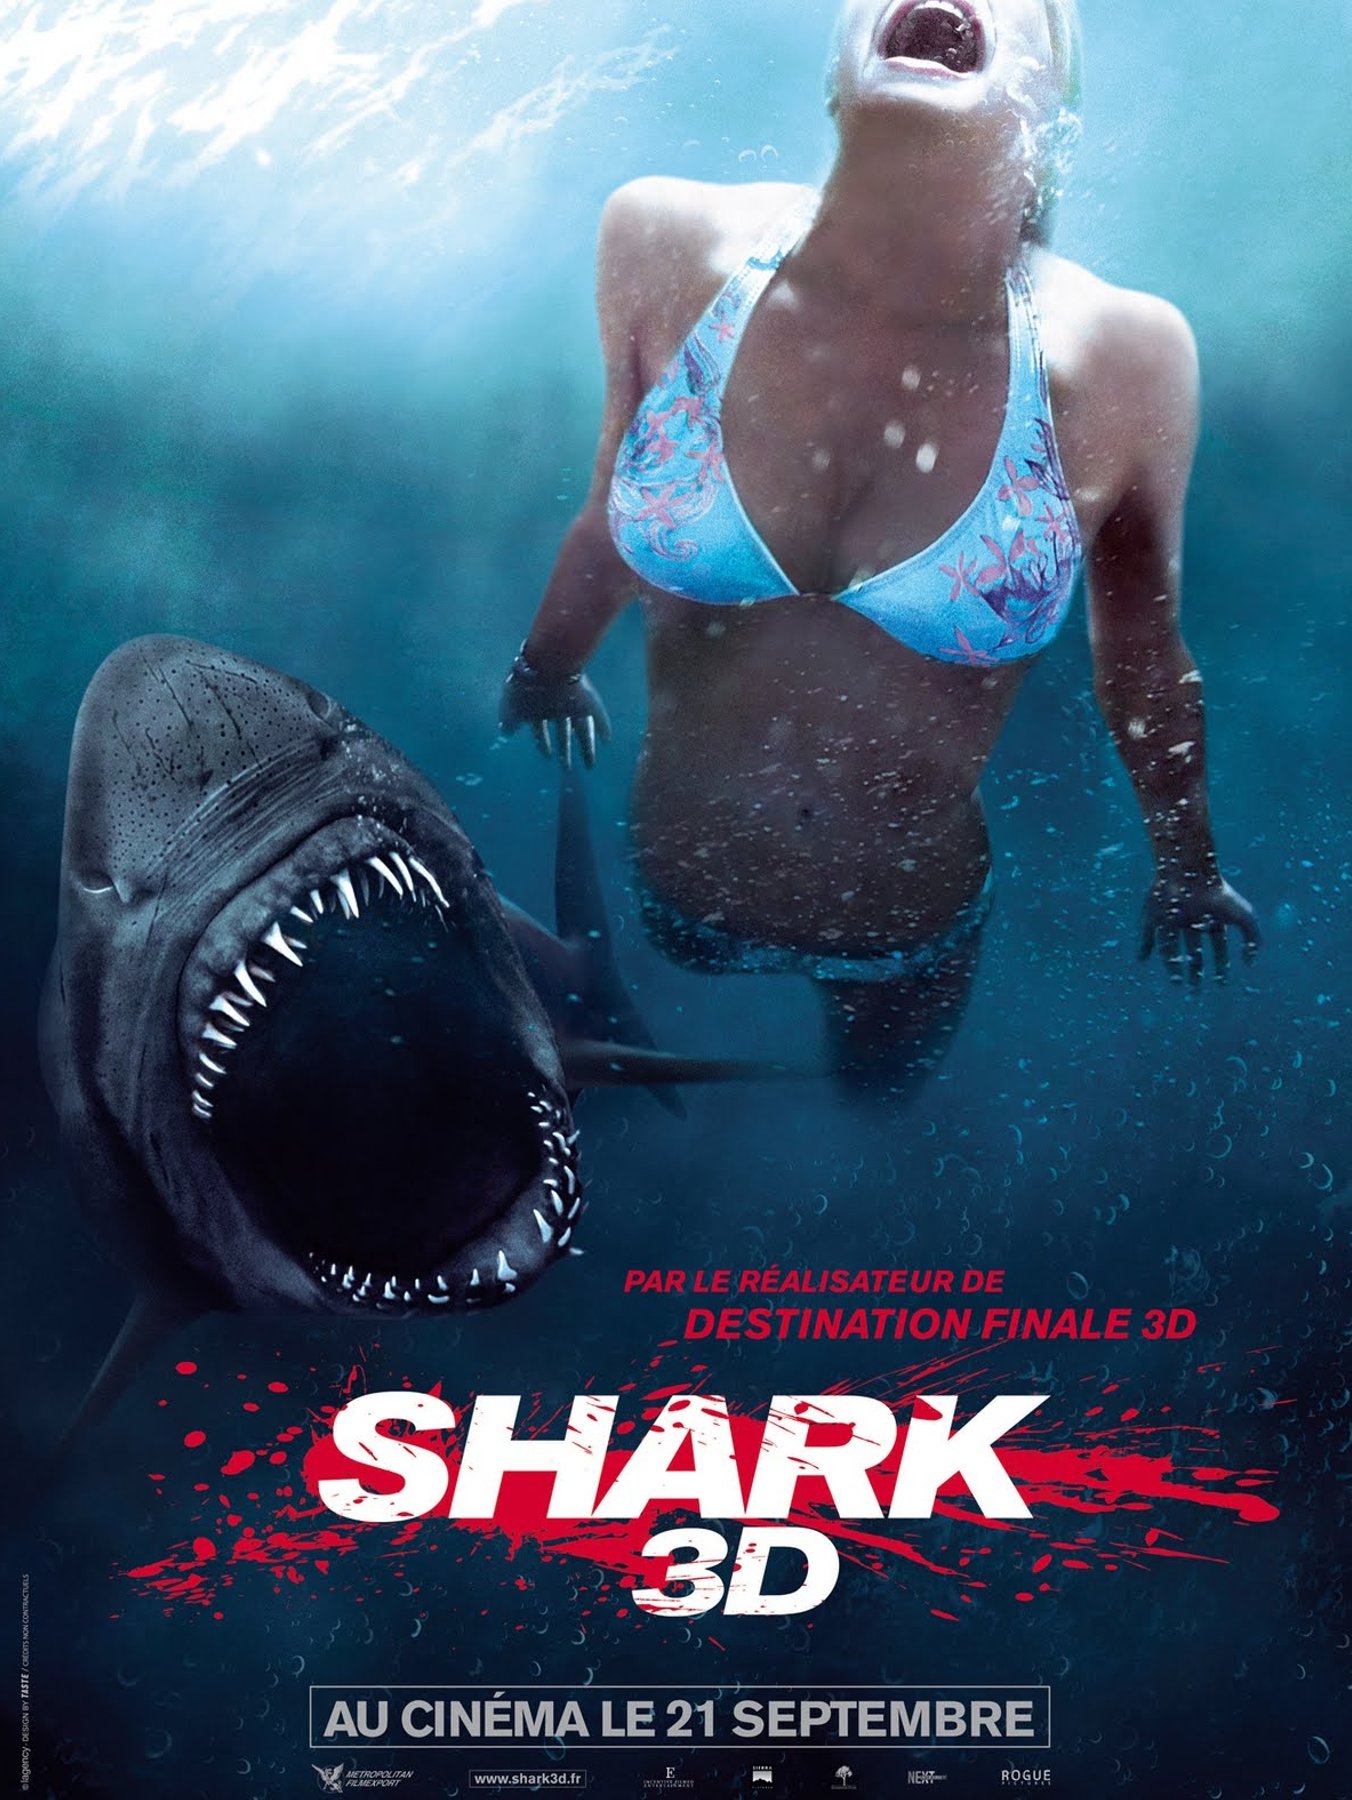 http://mutantville.com/blog/wp-content/uploads/2011/08/shark-night-3d-poster.jpg